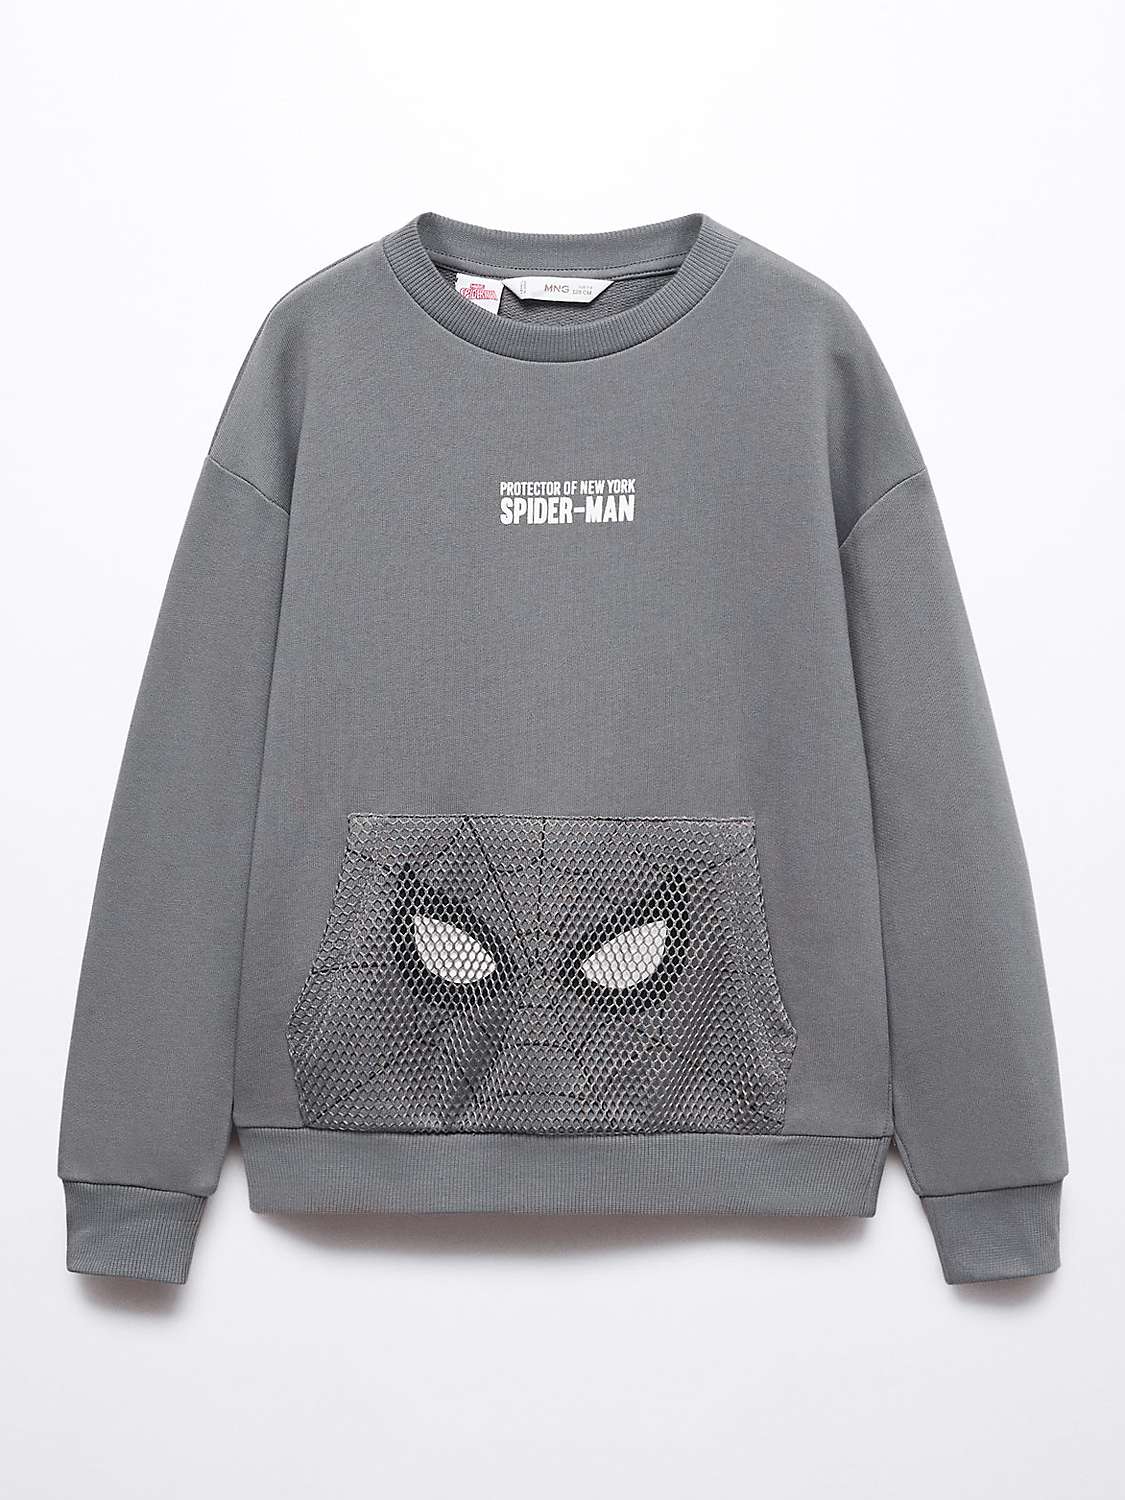 Buy Mango Kids' Spider-Man New York Mesh Pocket Sweatshirt, Grey Online at johnlewis.com